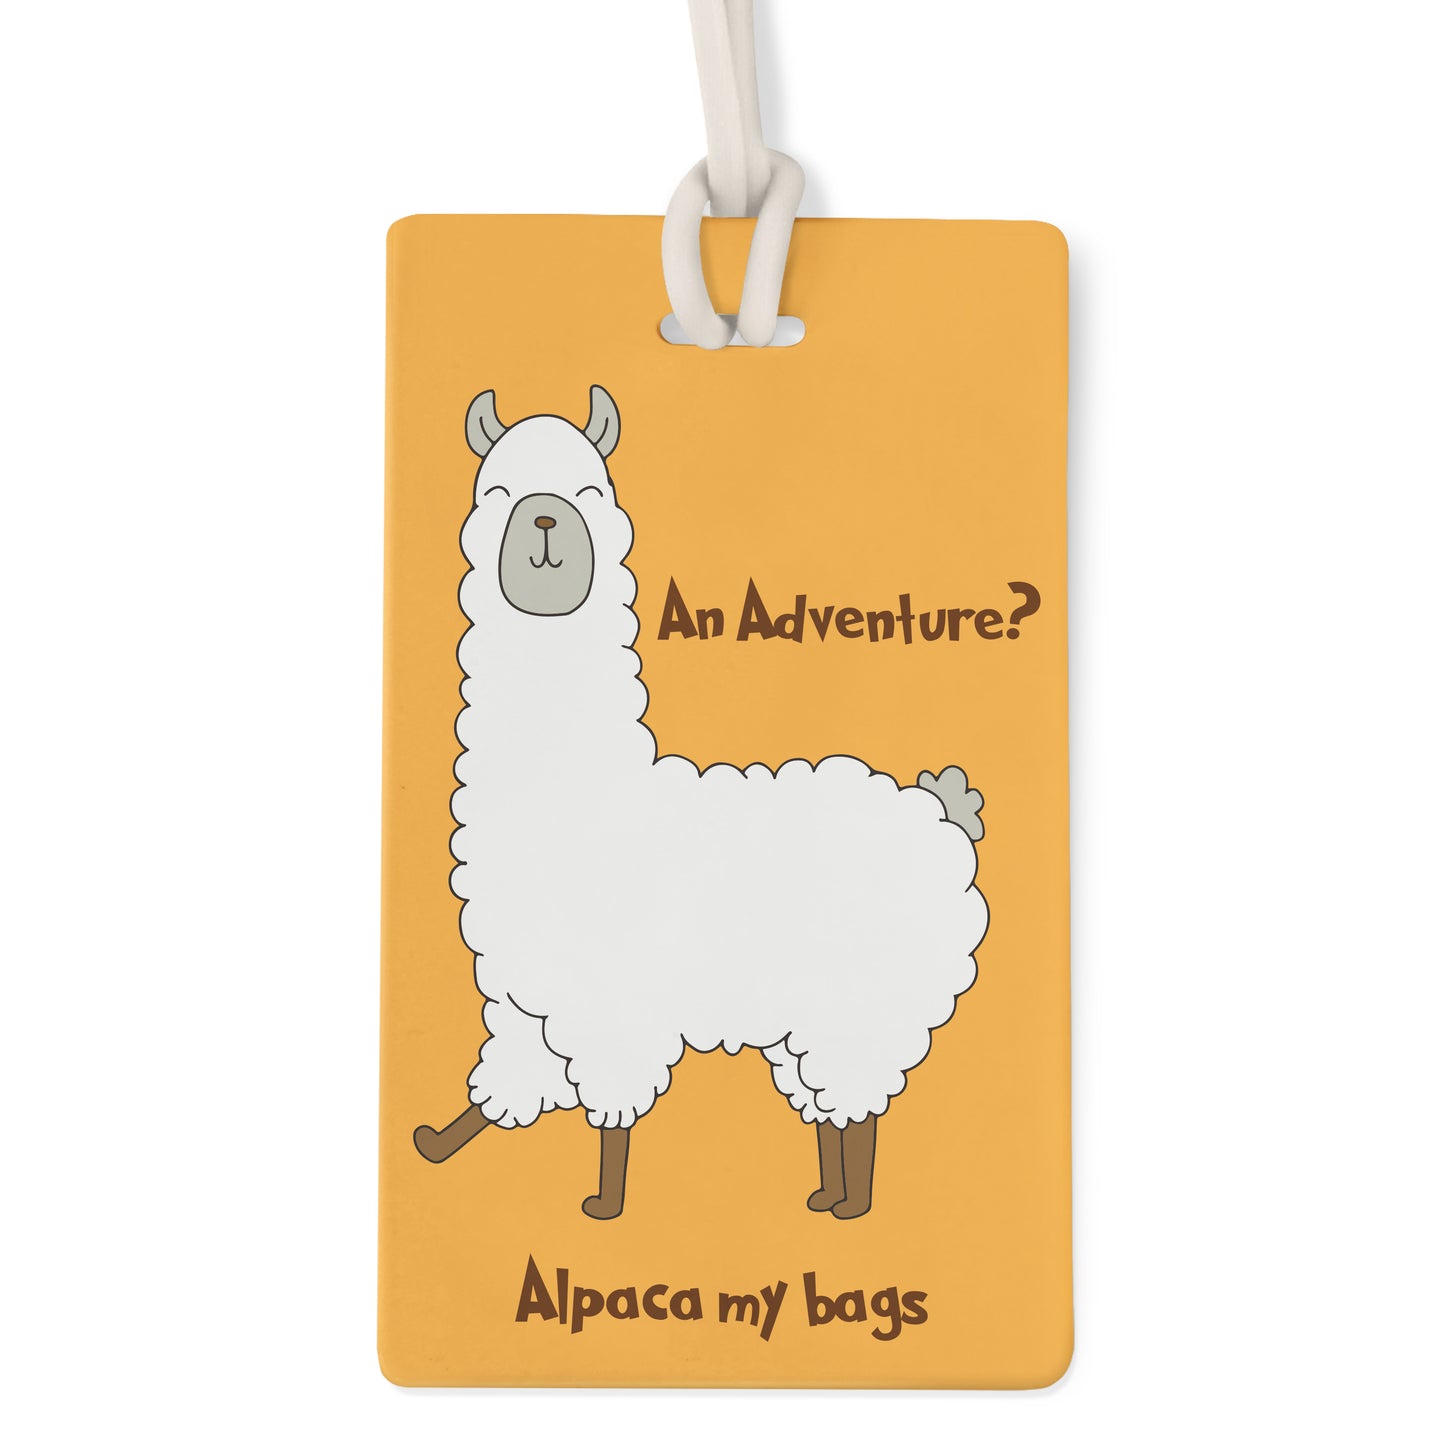 Urbanhand urban hand Alpaca Bag tag luggage Personalised Cute quirky travel accessories adventure 